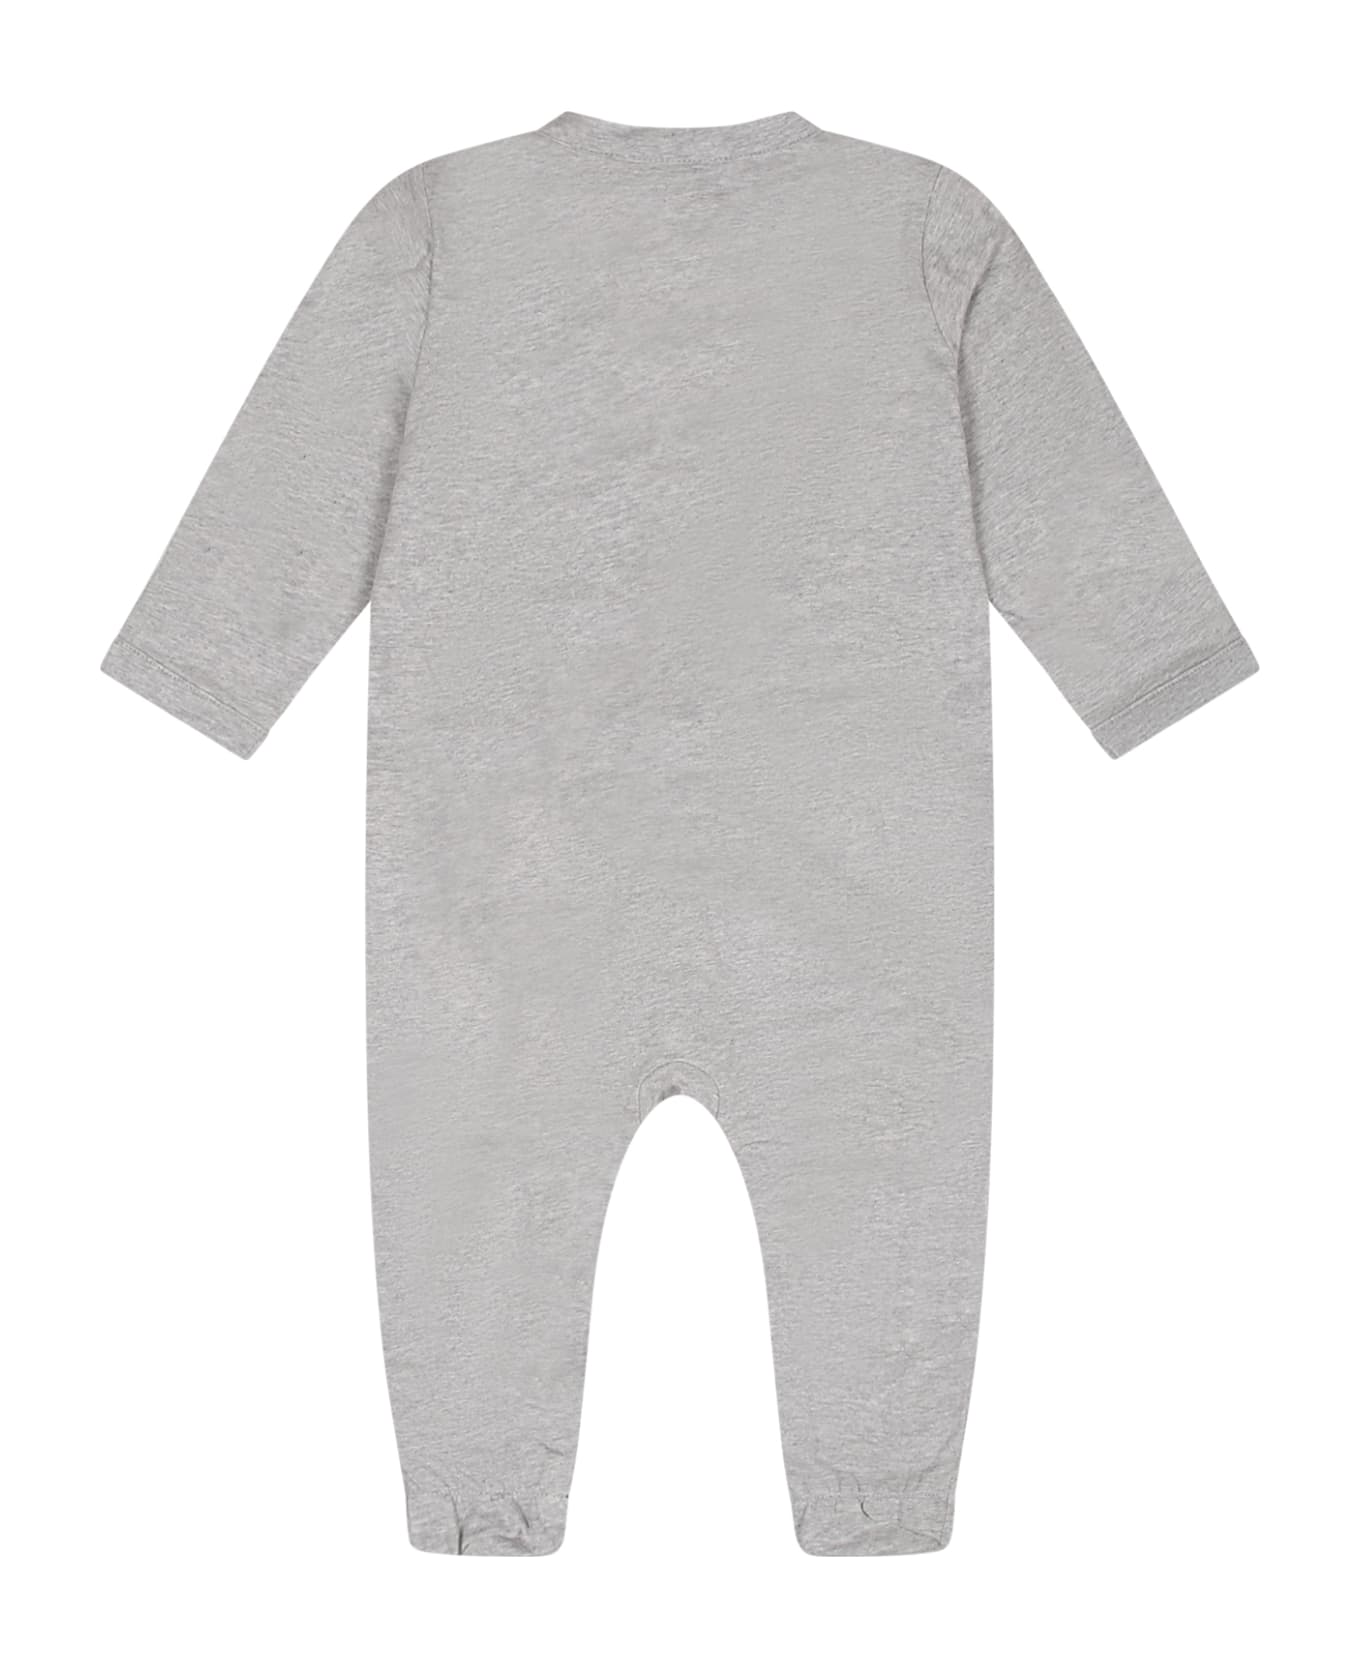 Moschino Grey Set For Baby Kids With Teddy Bear - Grey